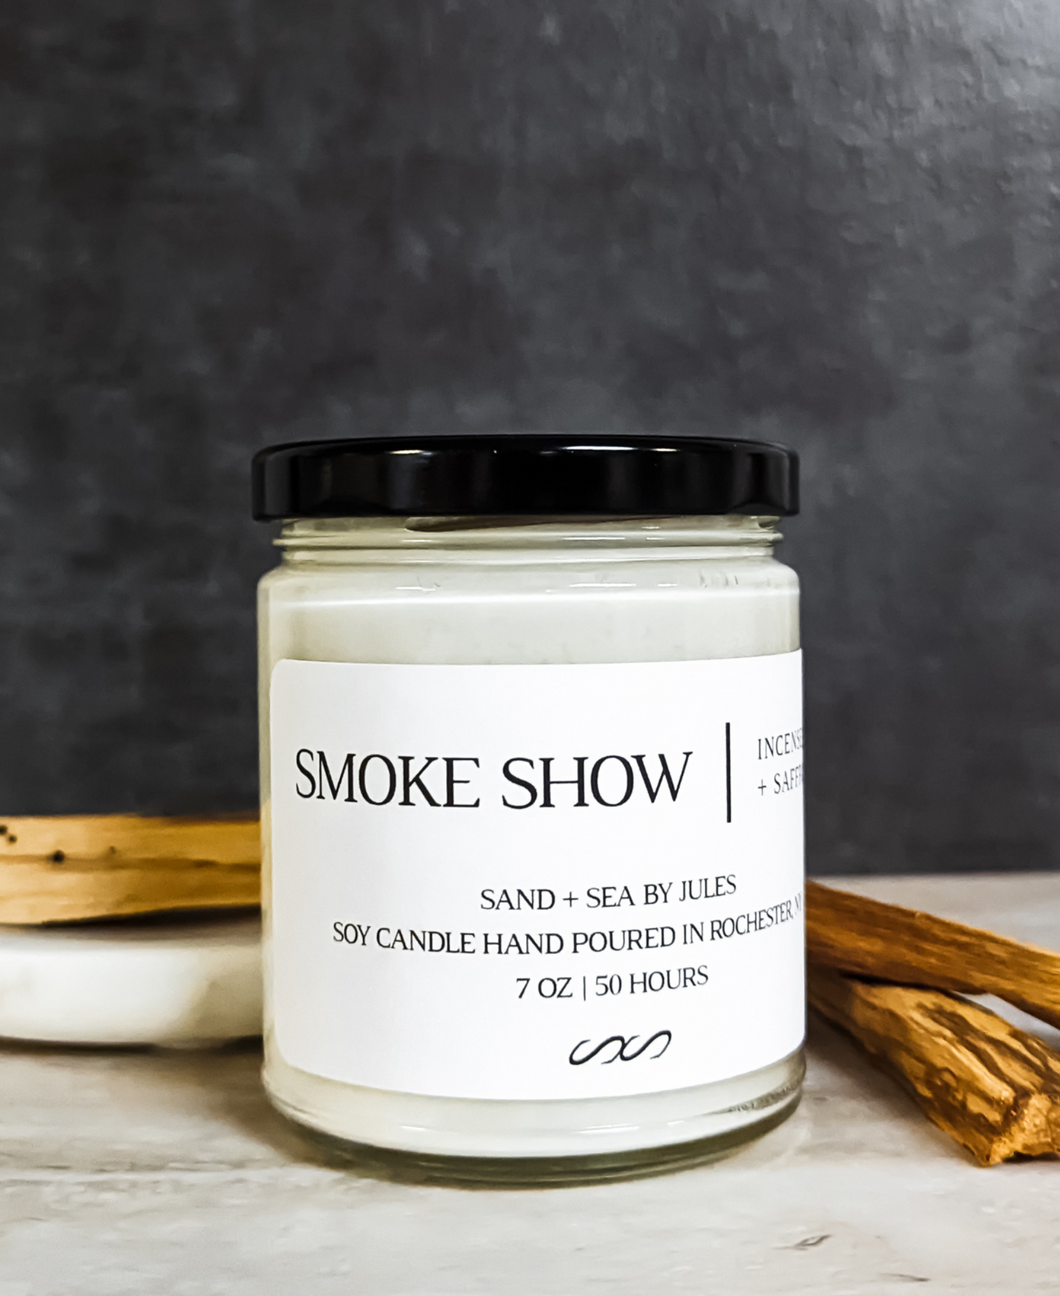 Smoke Show: Incense + Saffron